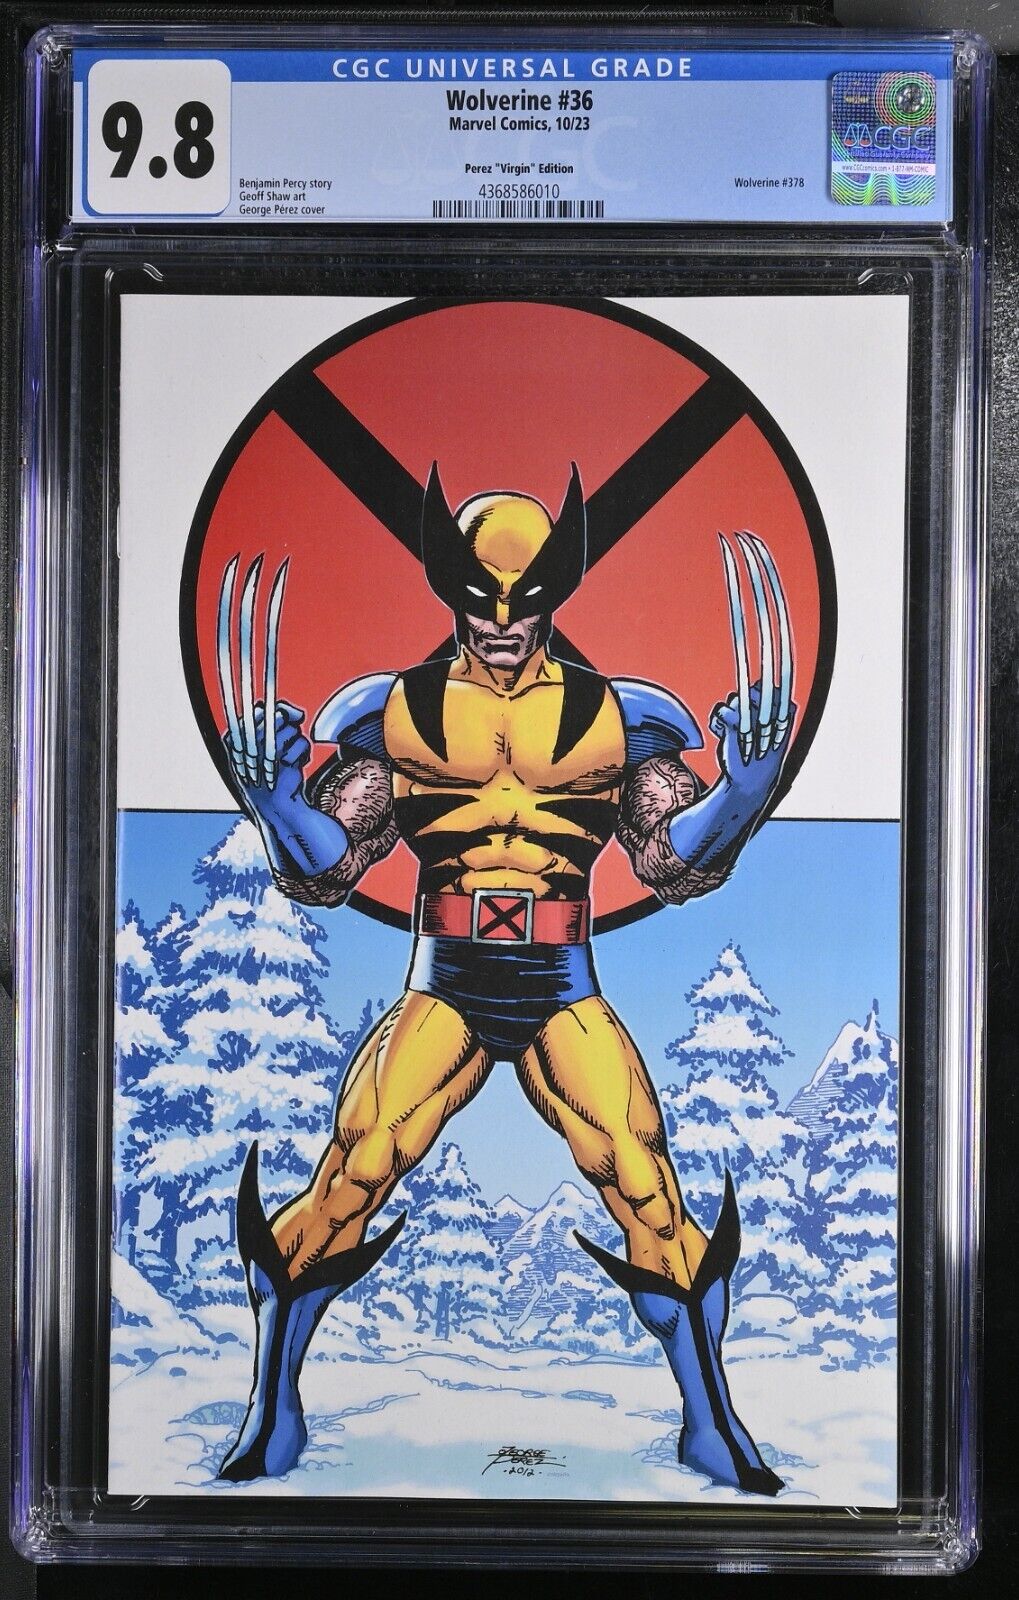 Wolverine #36 - CGC 9.8 - 1:100 Perez Virgin Edition